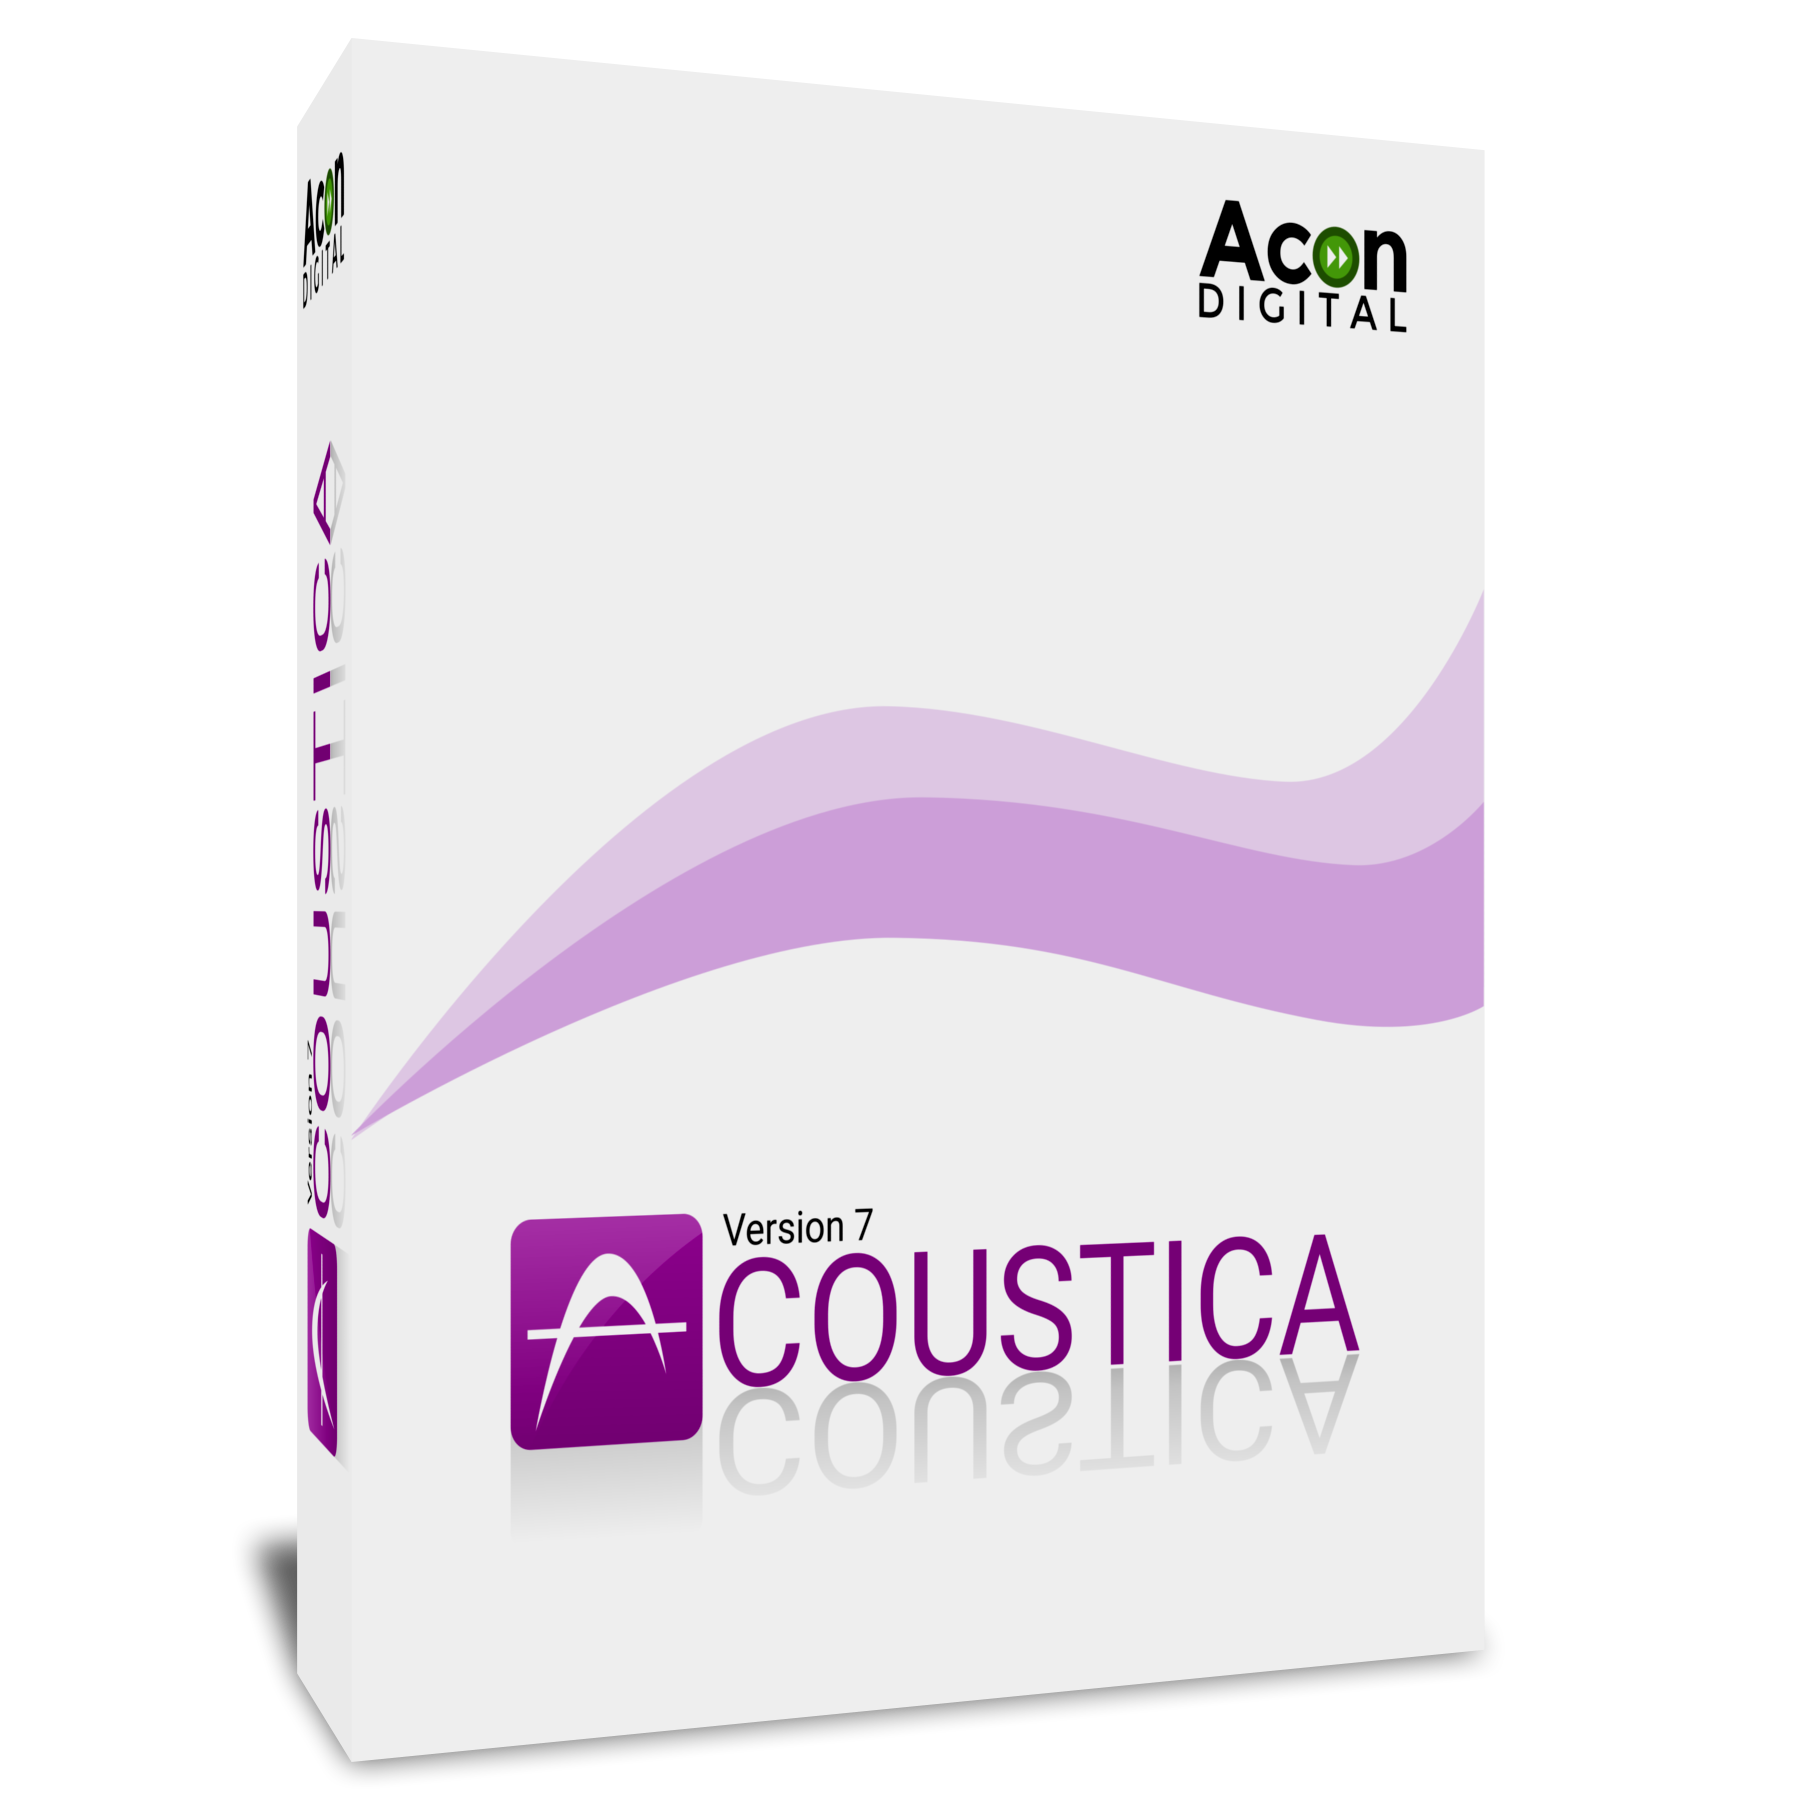 acon digital acoustica review